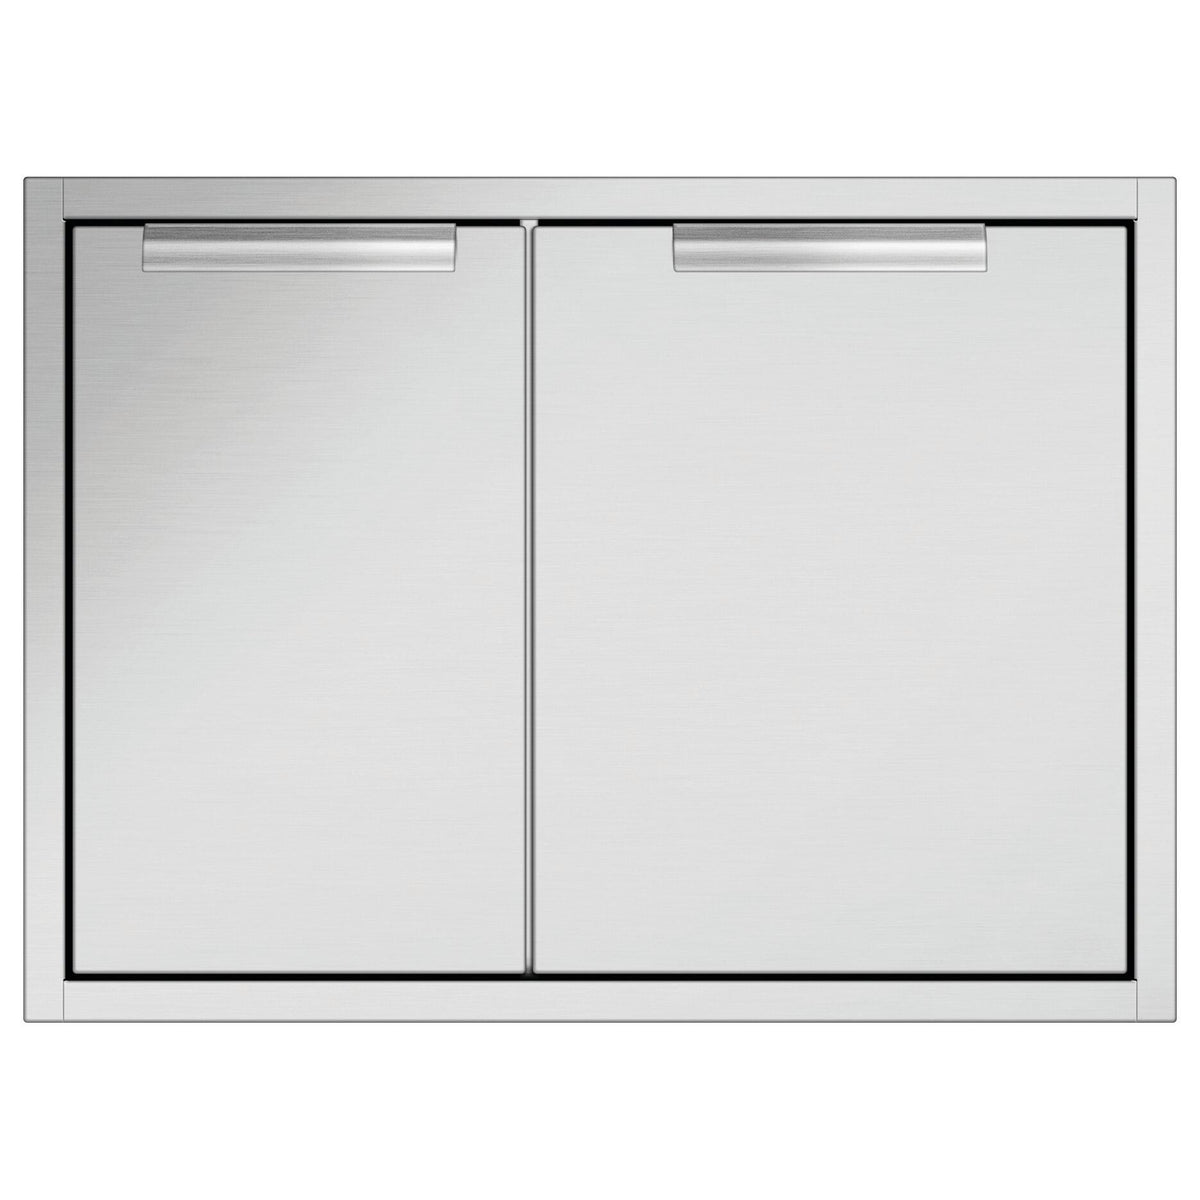 Outdoor Kitchen Components Storage Drawer(s) ADR2-30 IMAGE 1